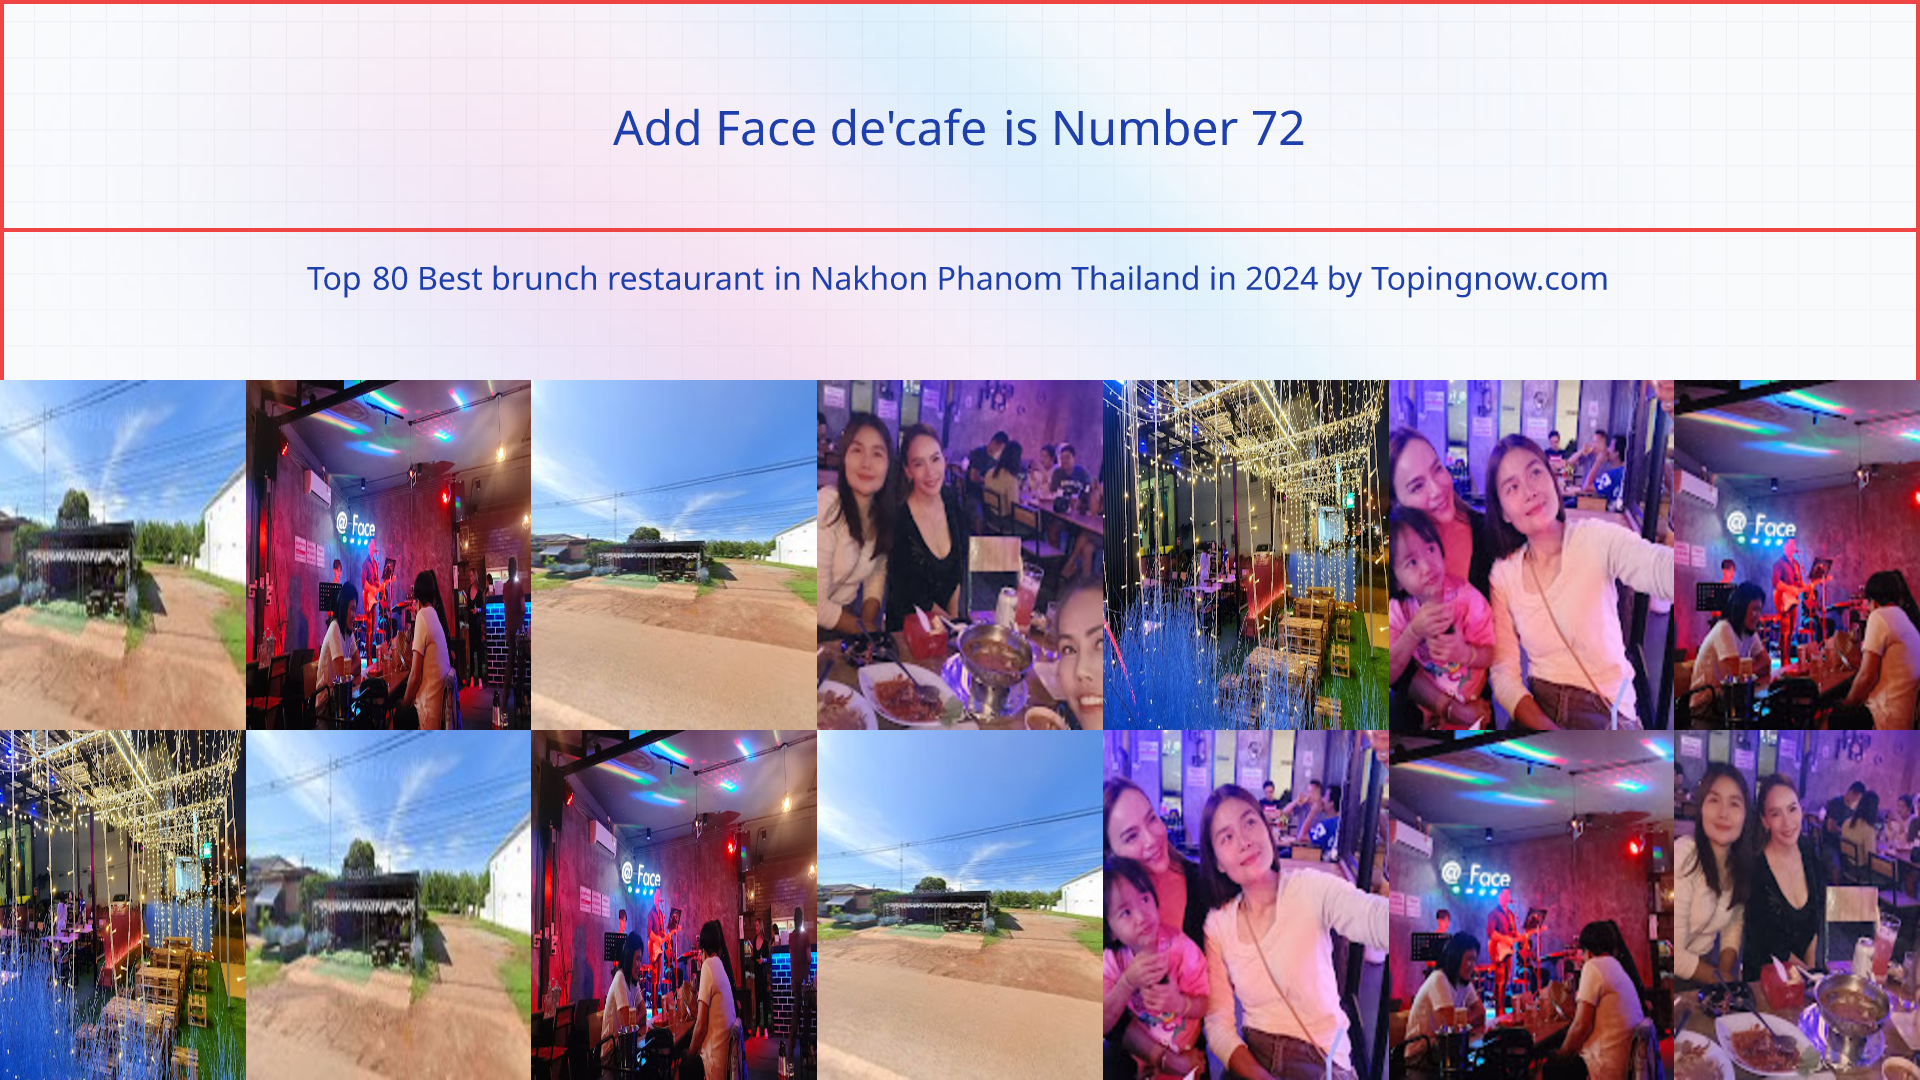 Add Face de'cafe: Top 80 Best brunch restaurant in Nakhon Phanom Thailand in 2024